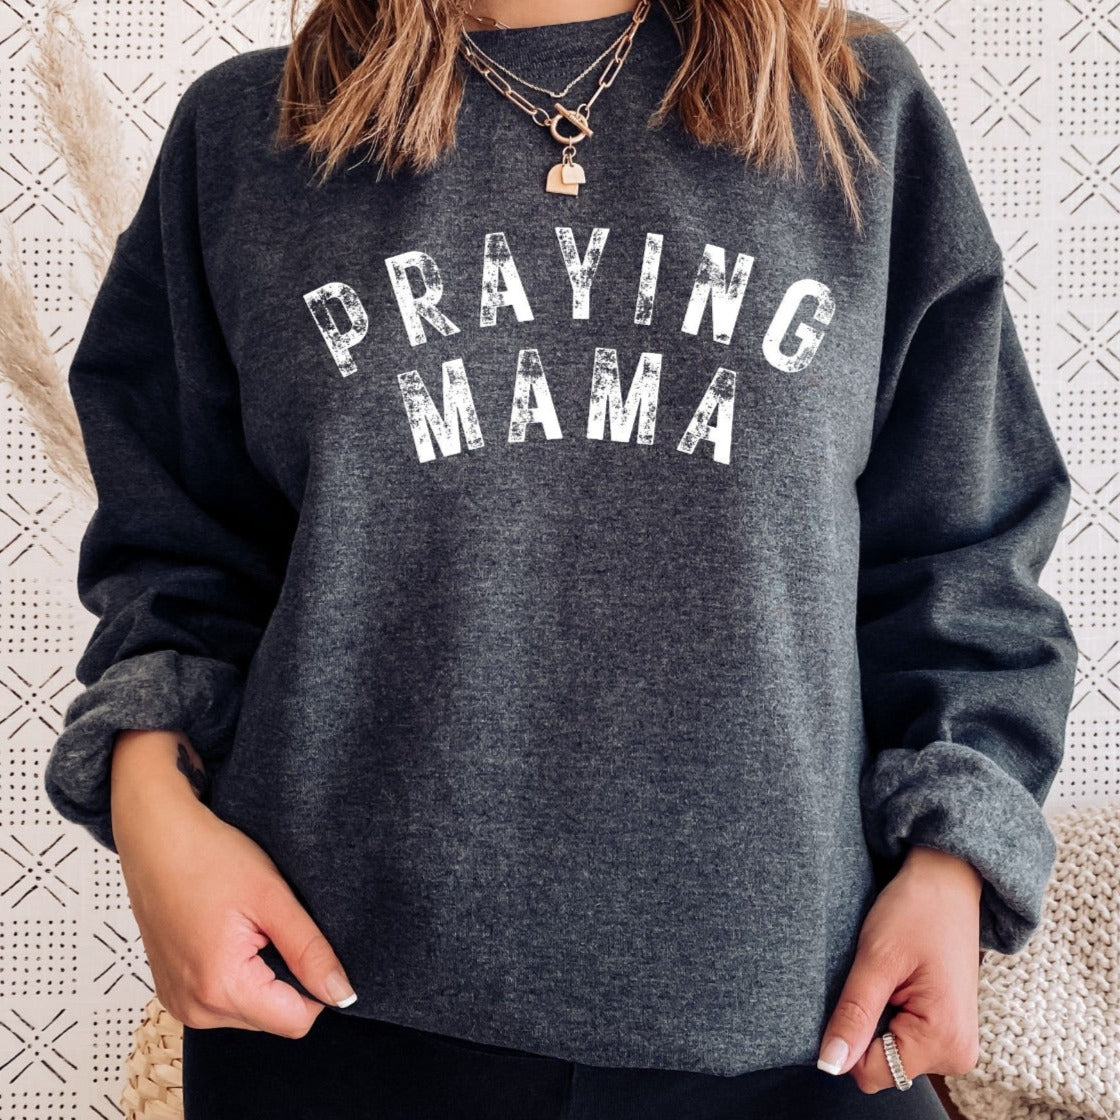 Praying Mama Charcoal Top (Tee, Long-Sleeve or Sweatshirt)